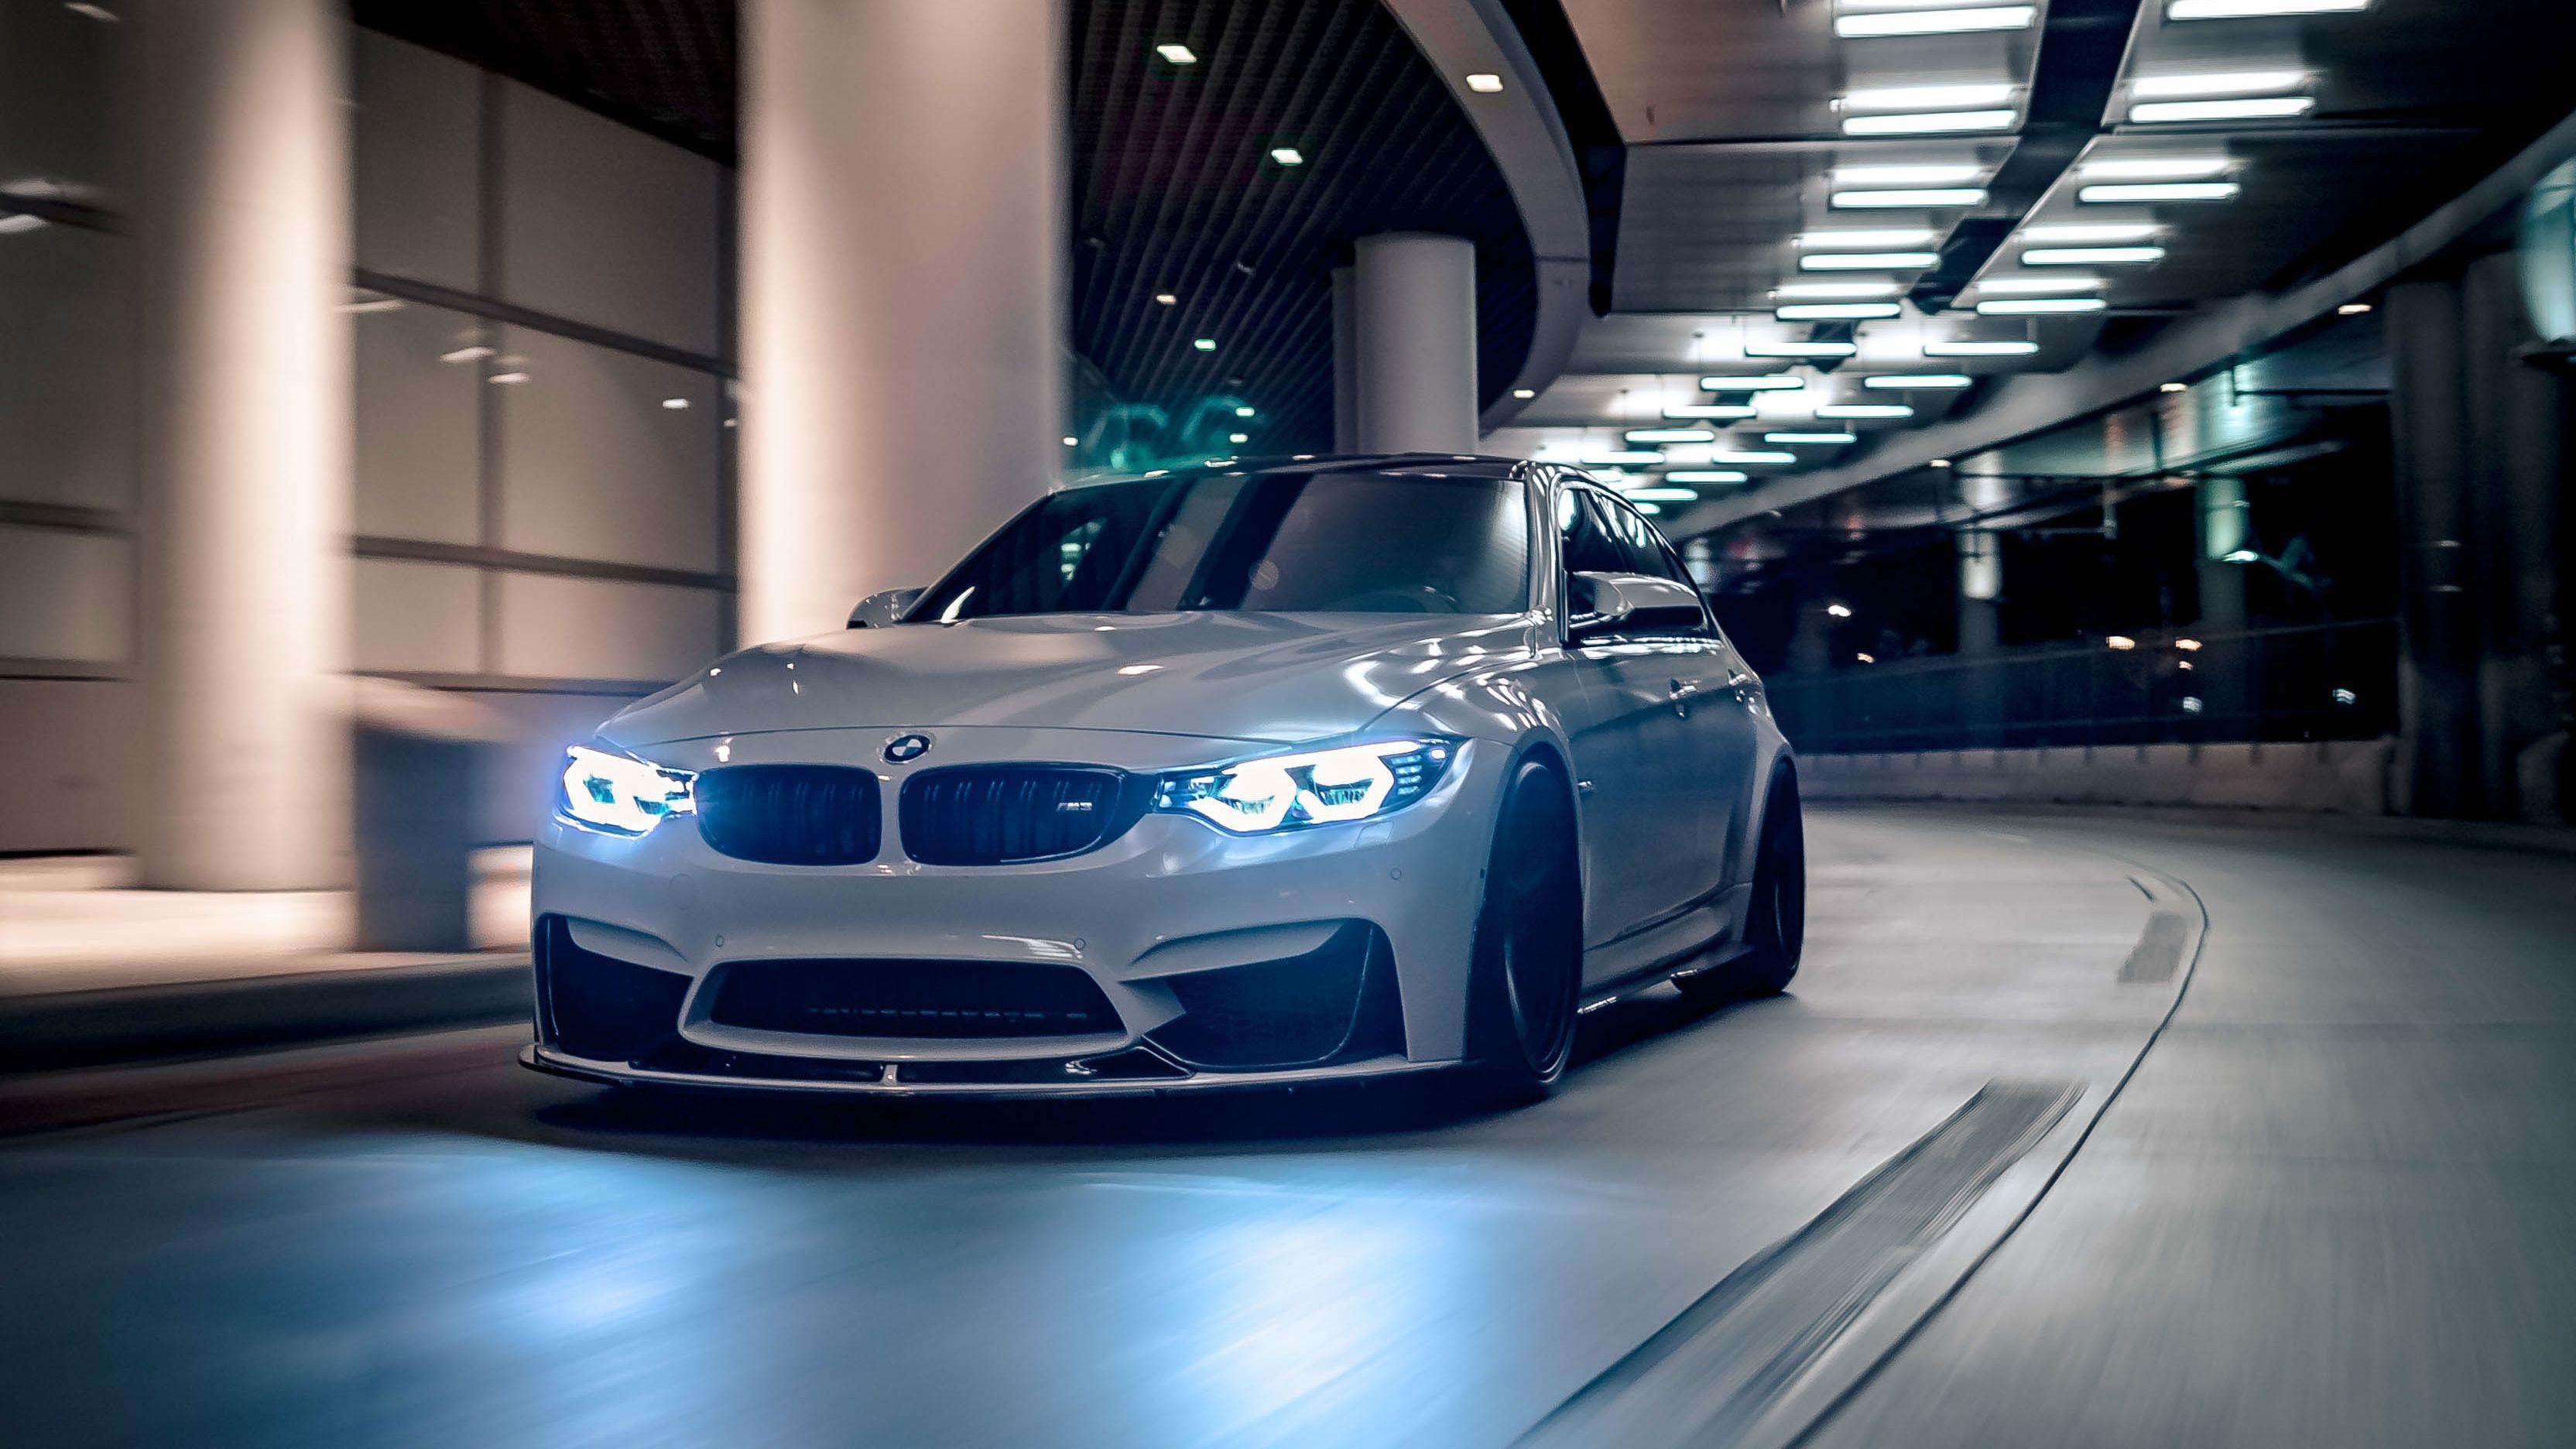 Exclusive: BMW wallpapers | BMW.com